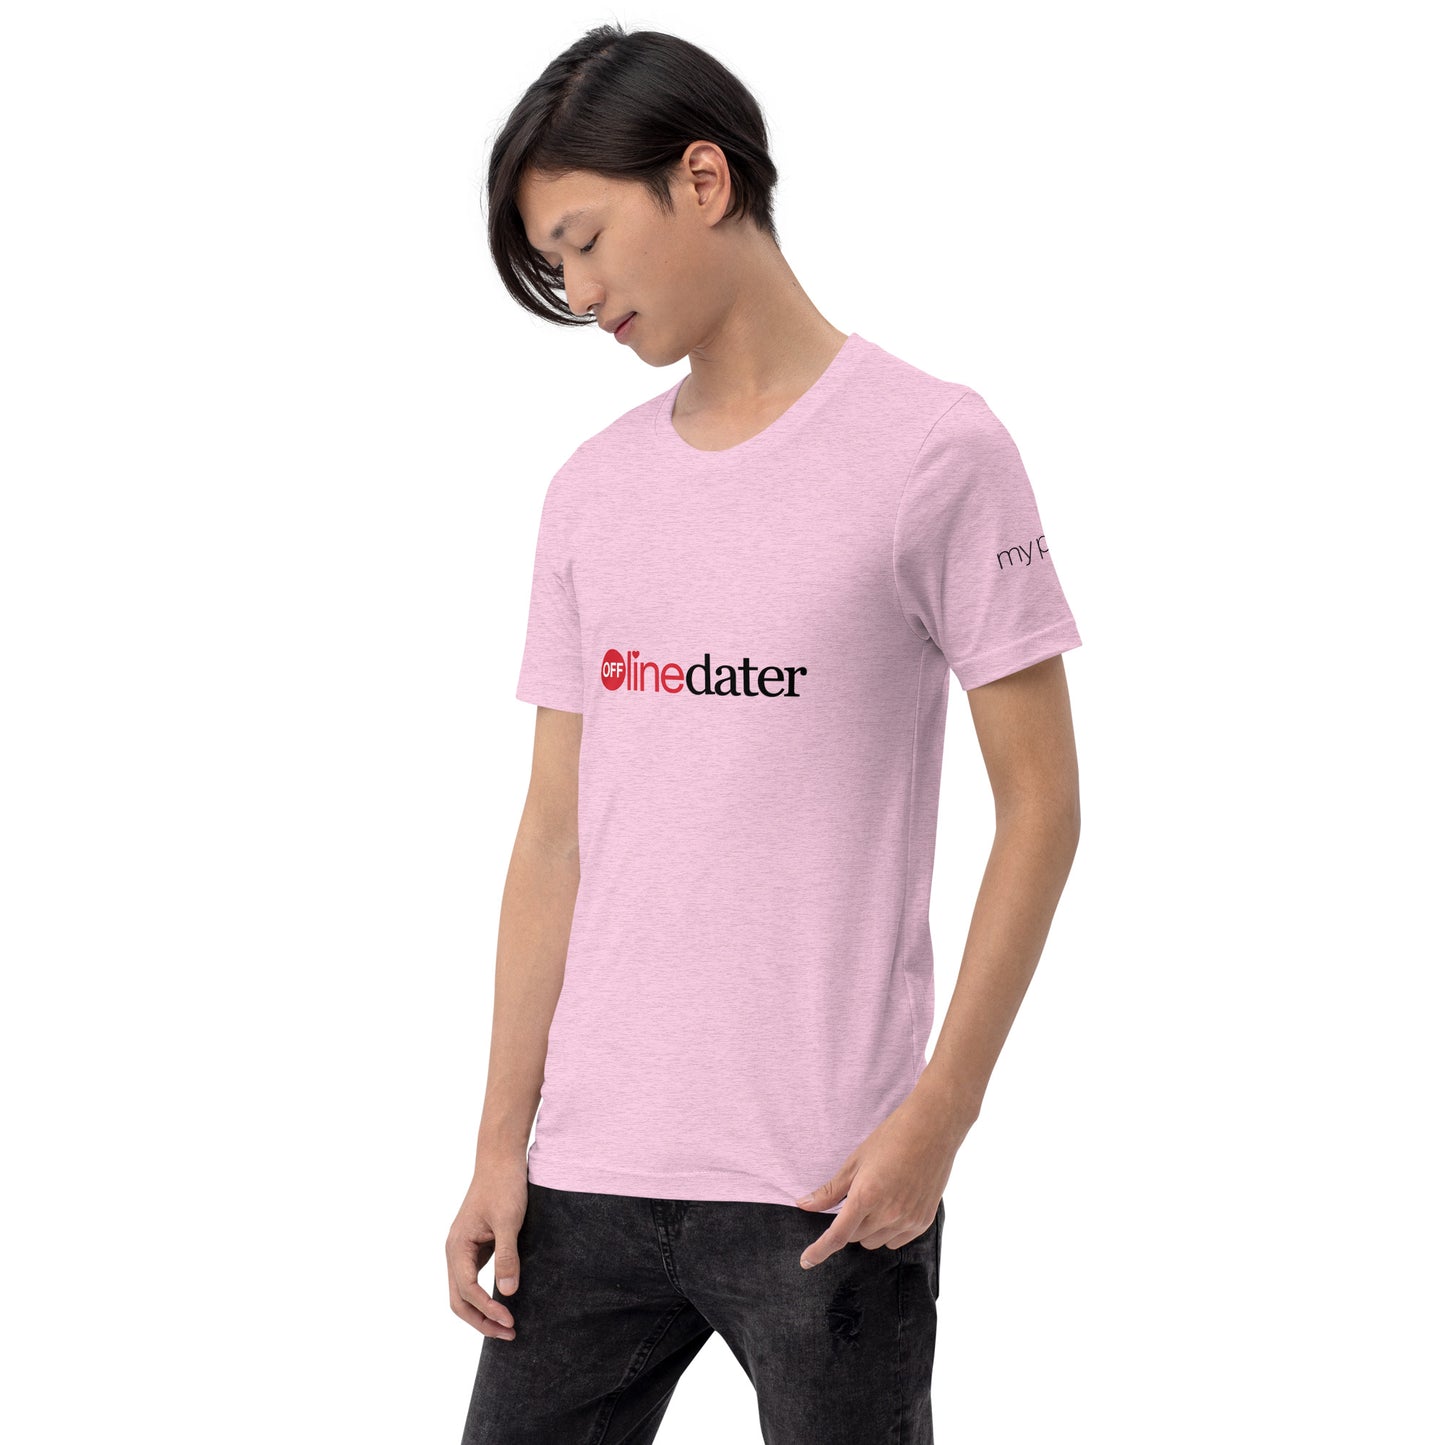 My Profile Offline Dater Unisex T-Shirt